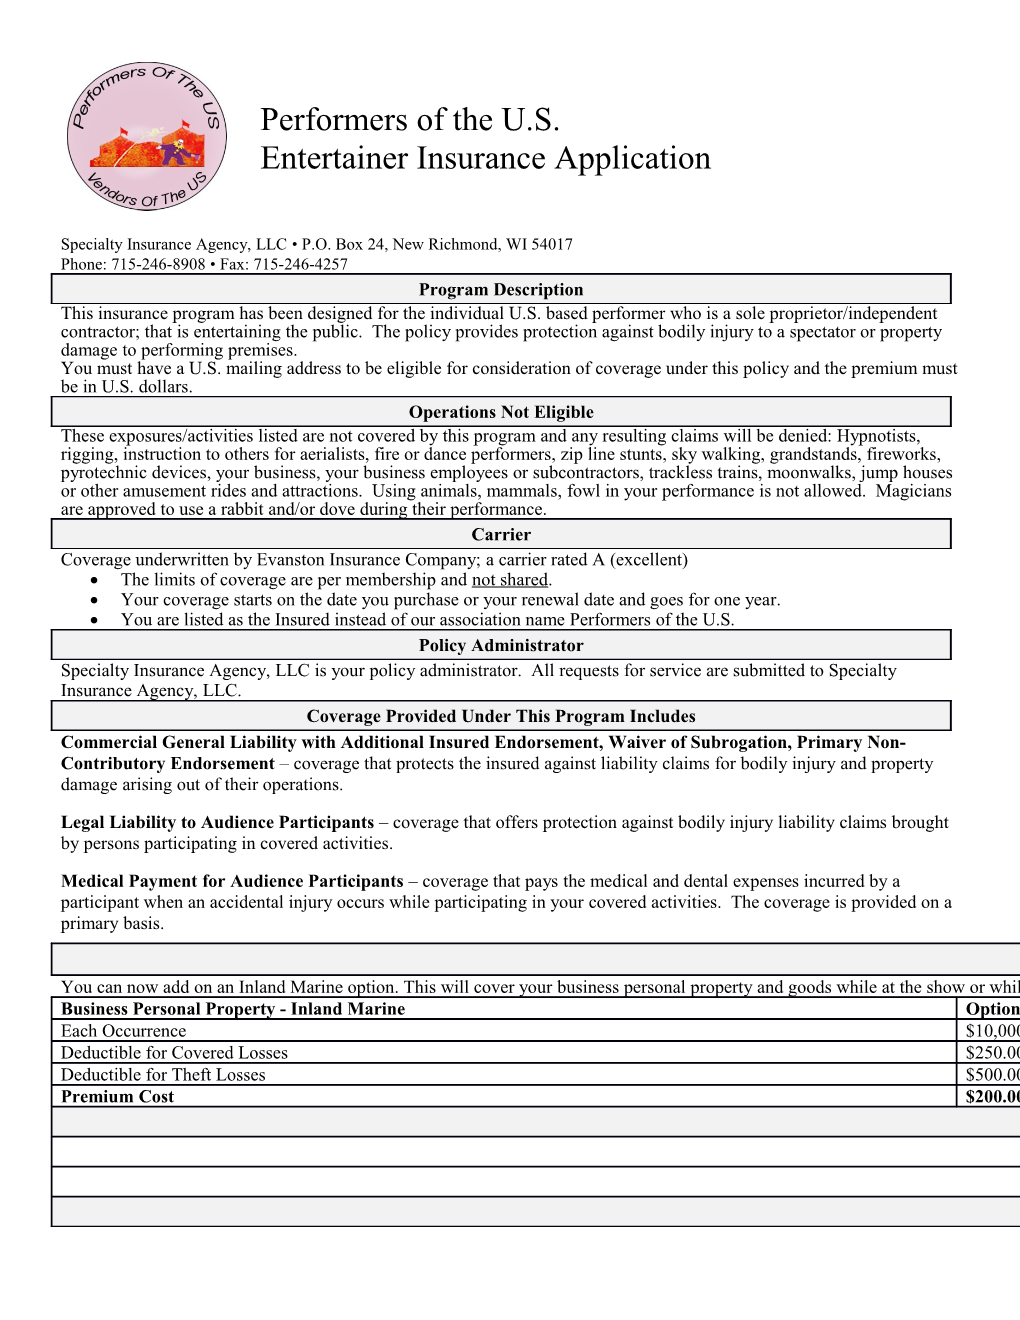 Specialty Insurance Agency, LLC P.O. Box 24, New Richmond, WI 54017